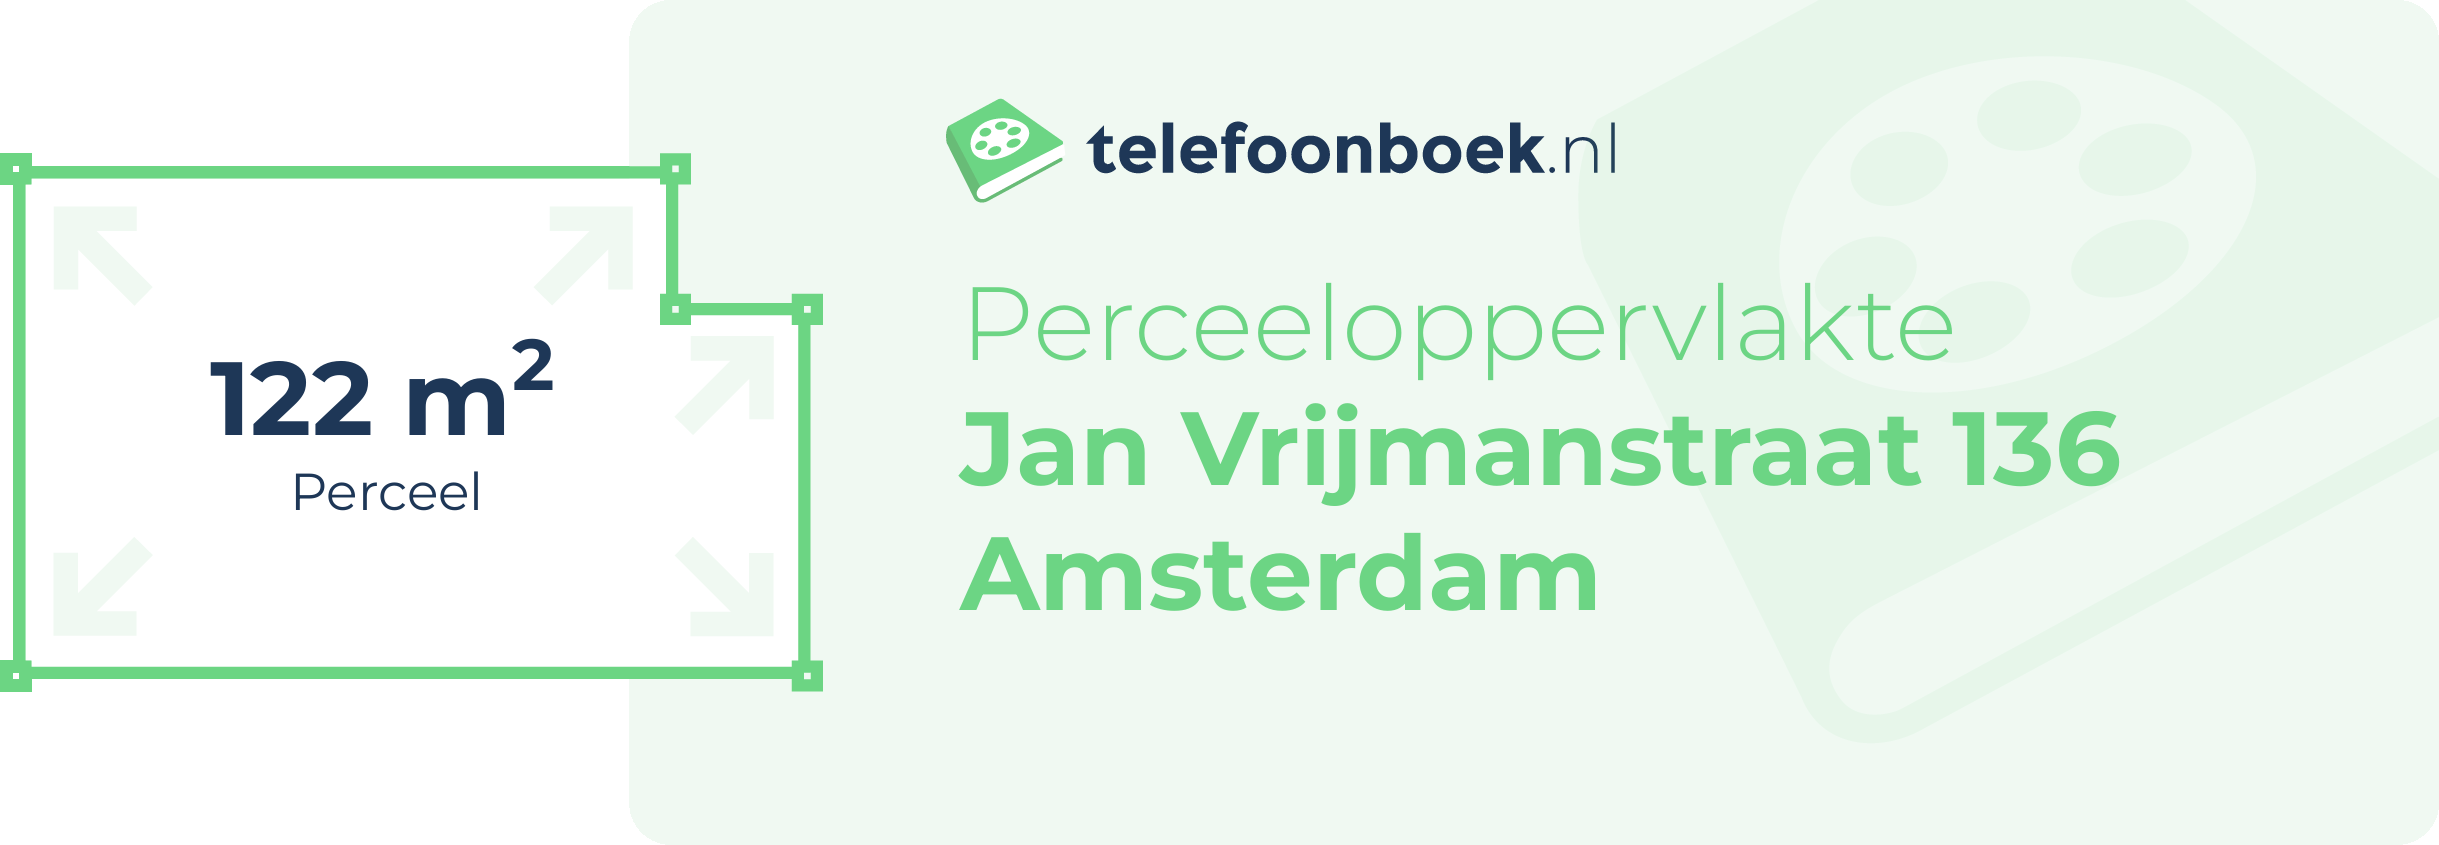 Perceeloppervlakte Jan Vrijmanstraat 136 Amsterdam